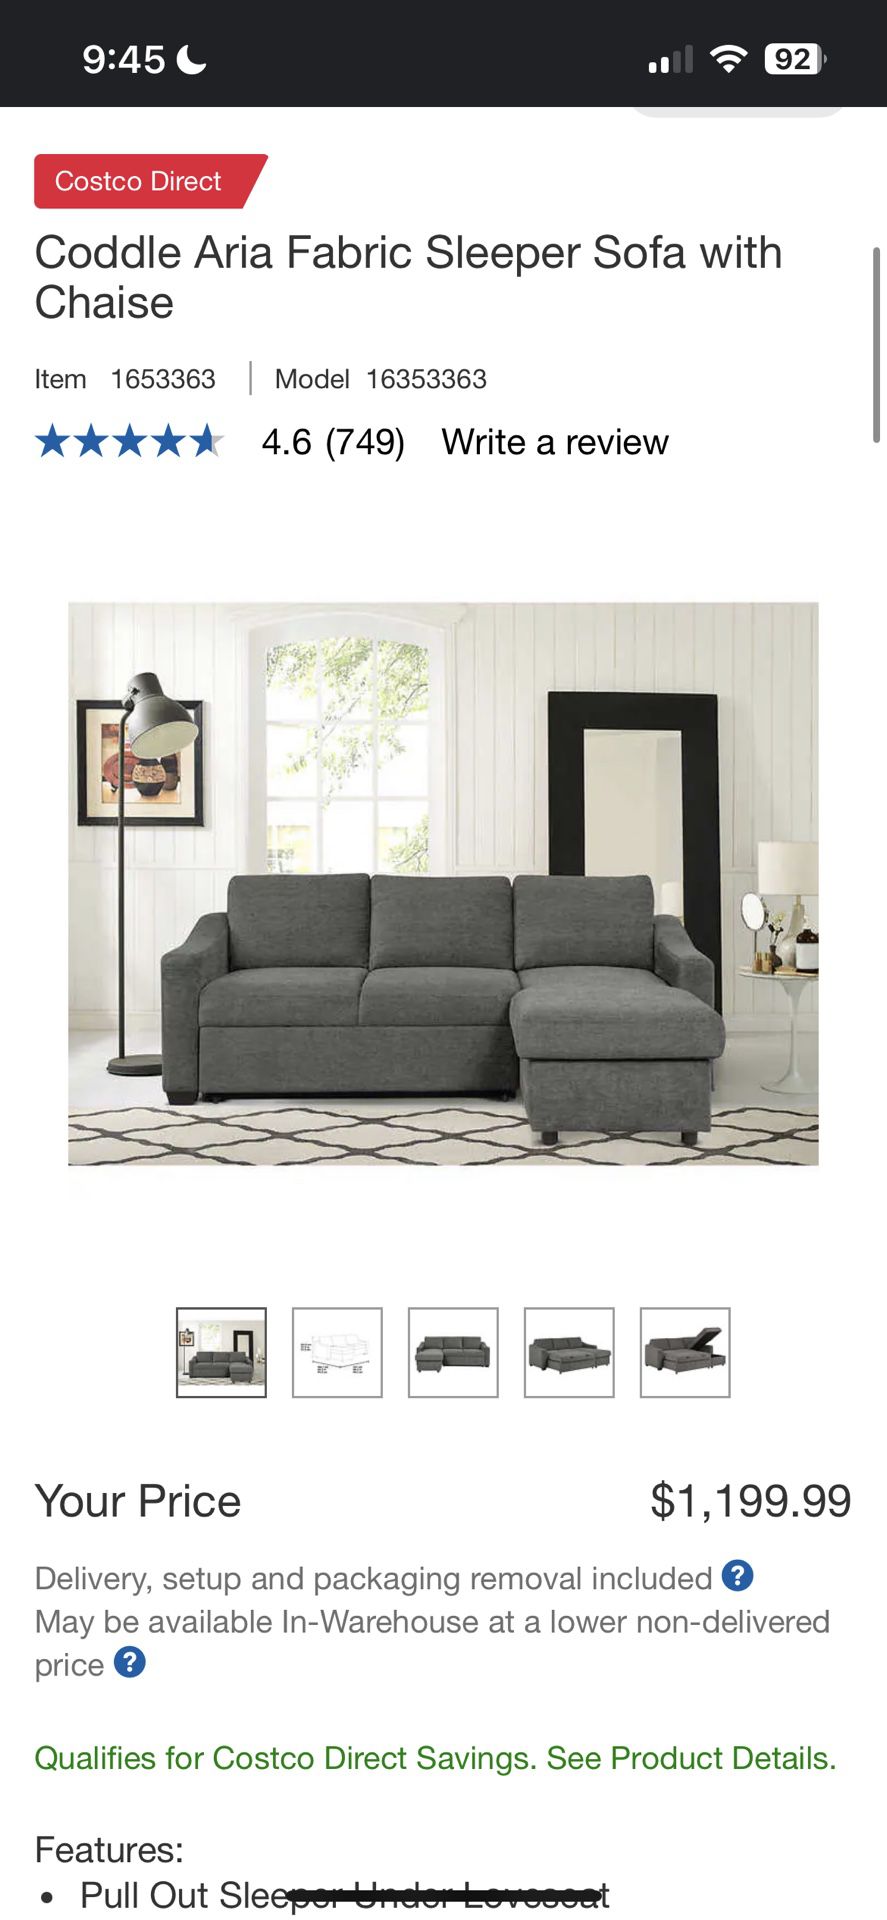 Coddle Aria Fabric Sleeper Sofa with Chaise